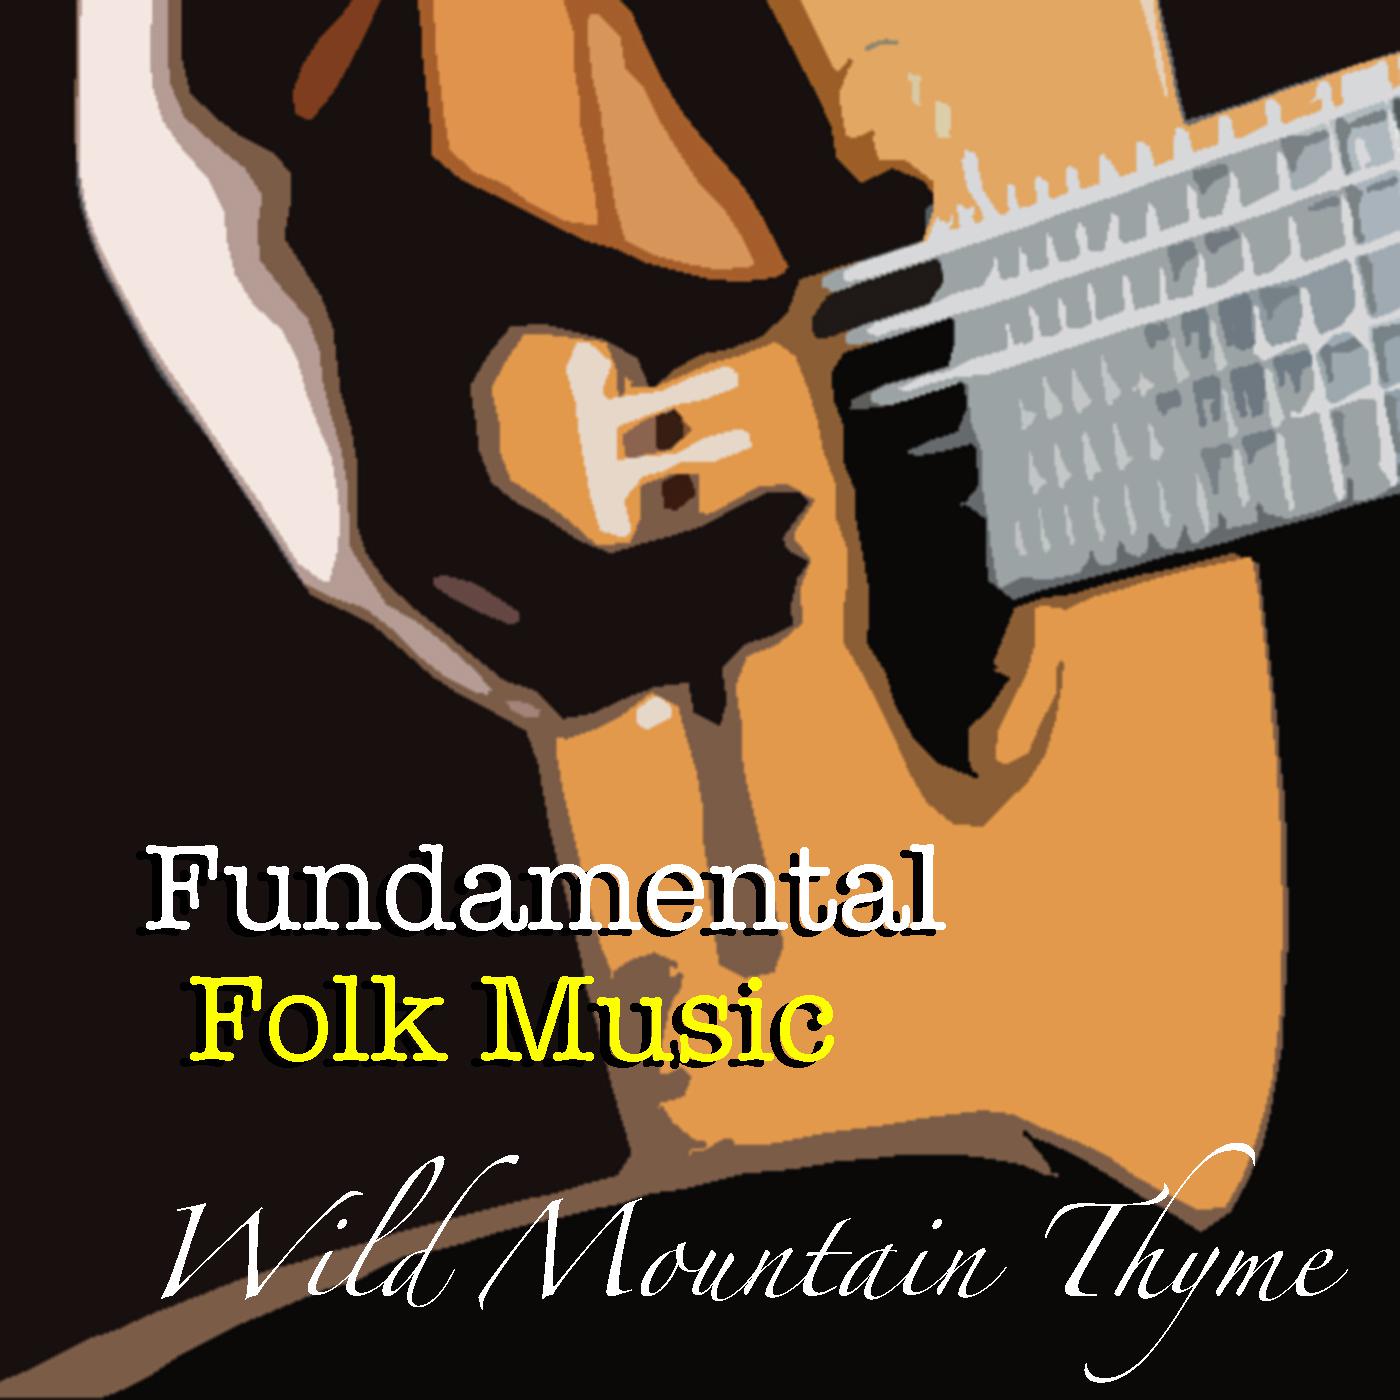 Wild Mountain Thyme Fundamental Folk Music